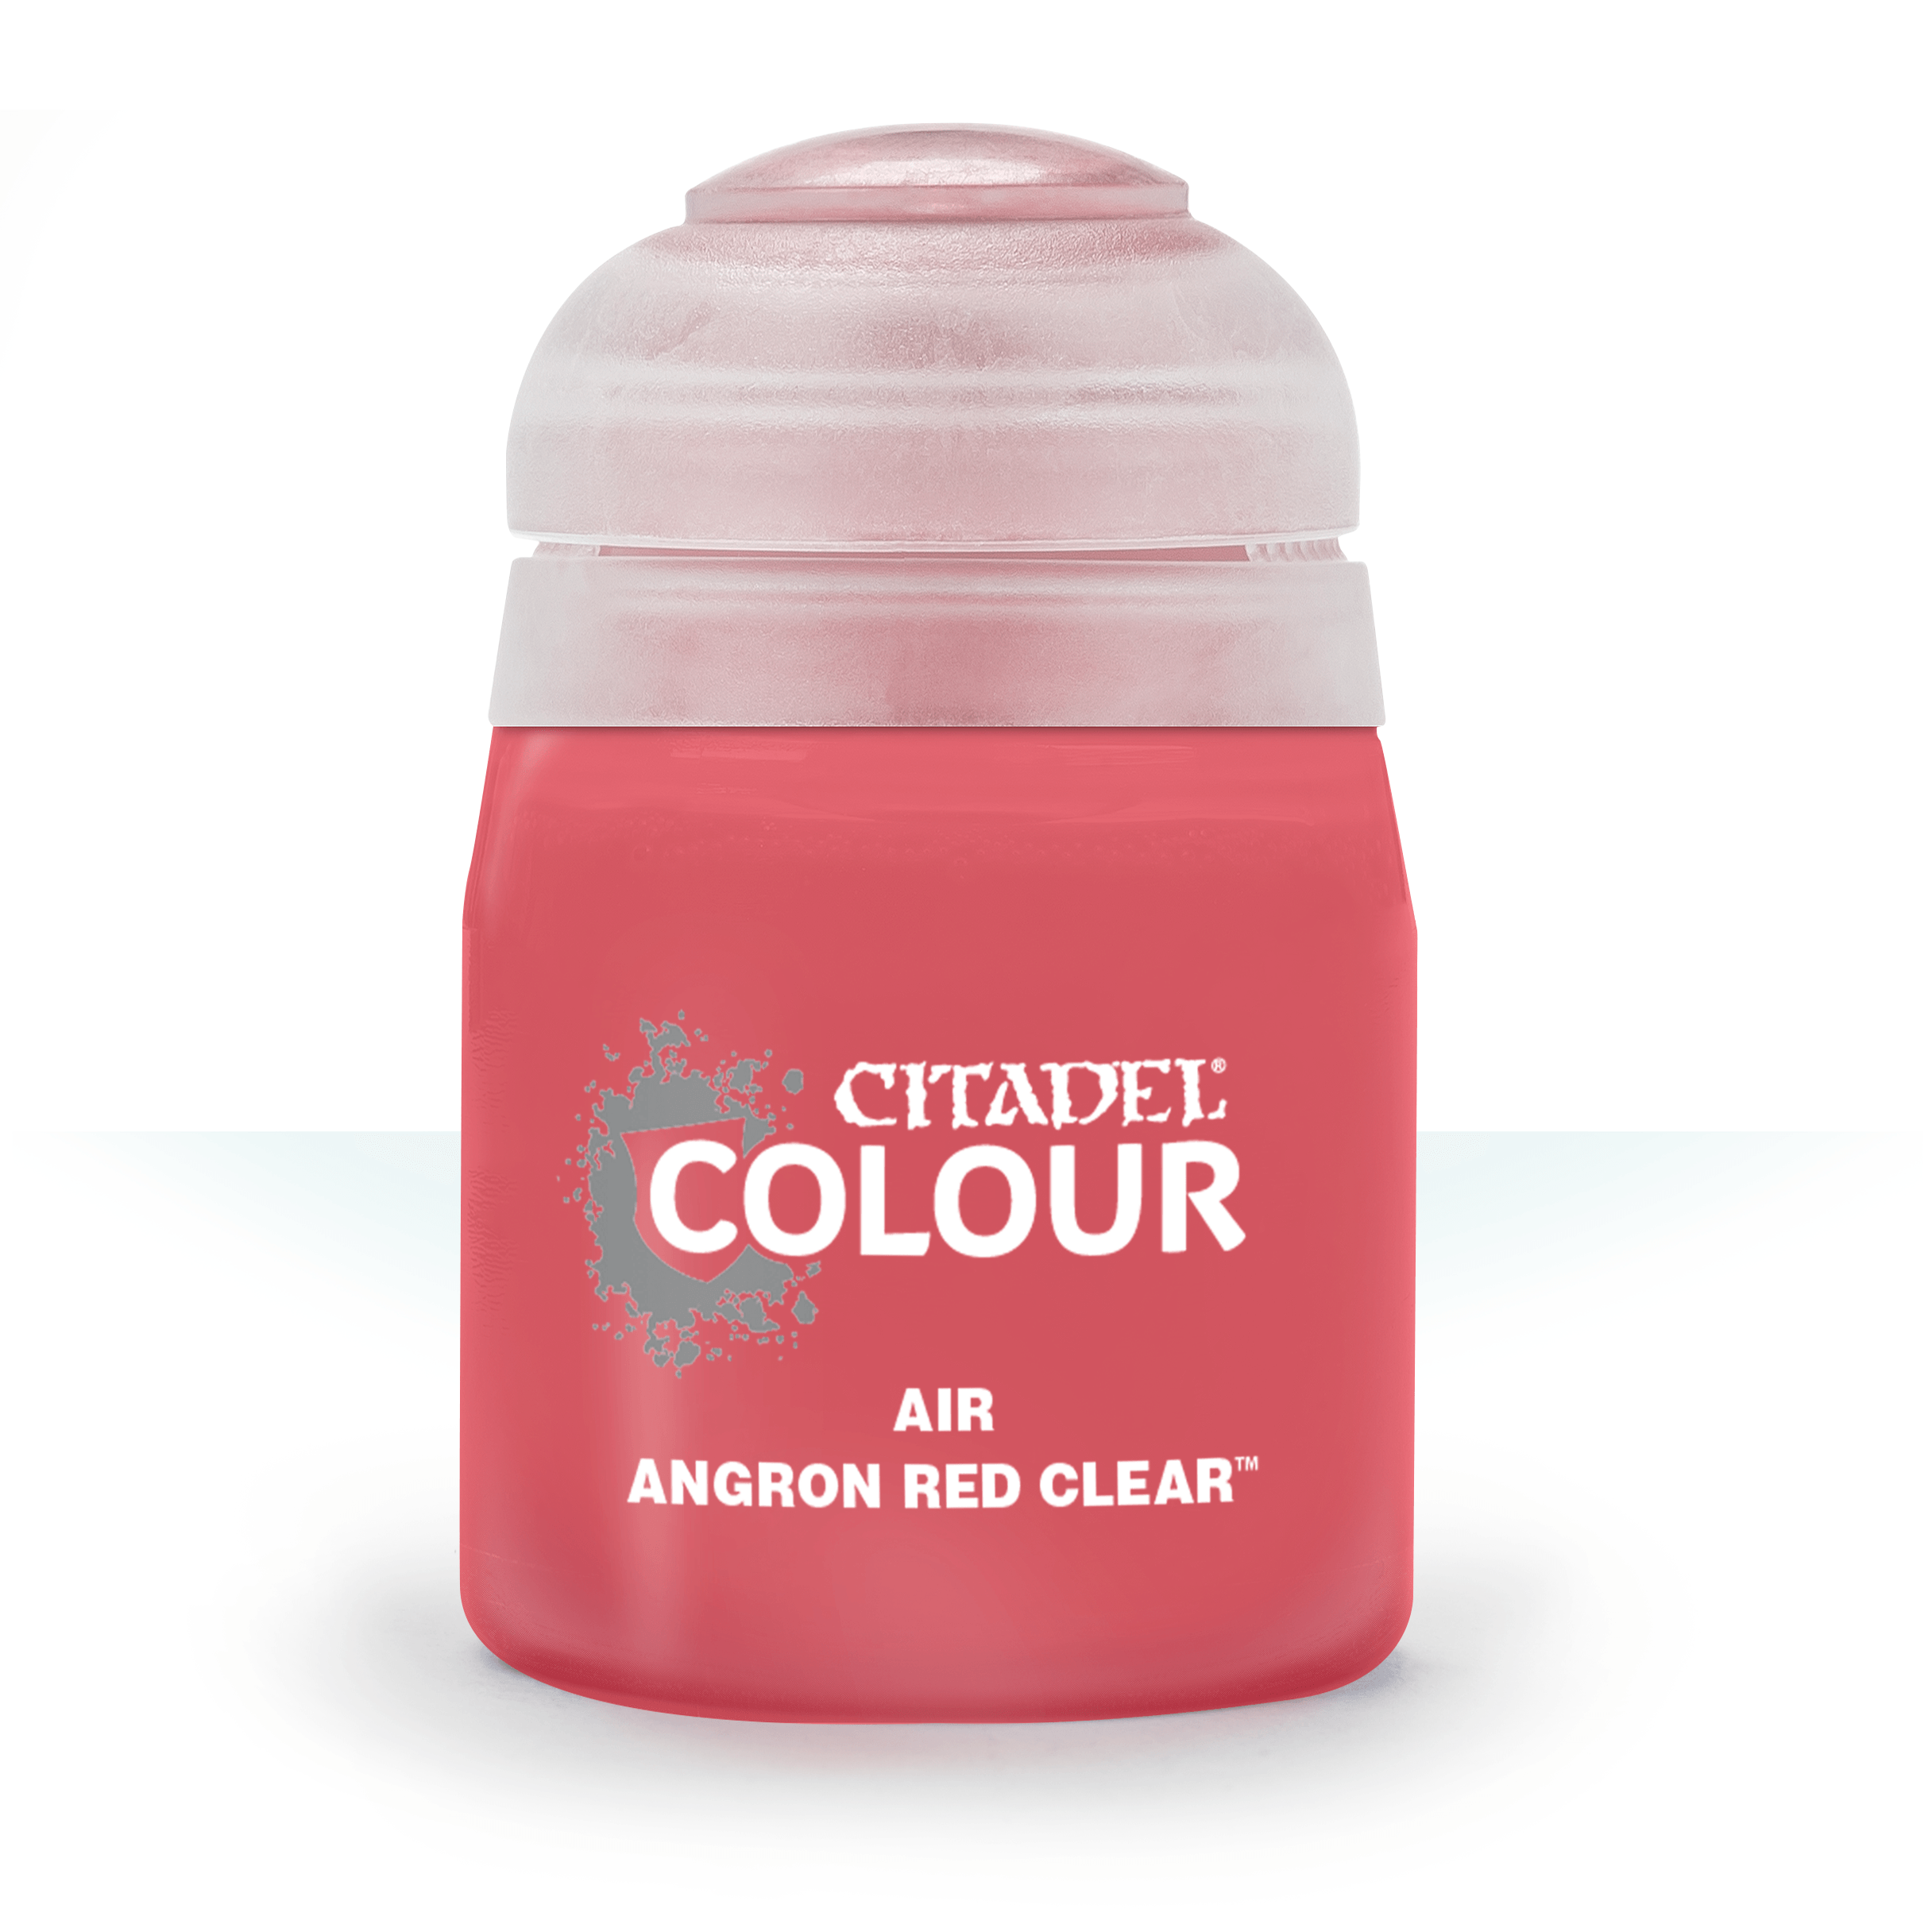 Angron Red Clear - Citadel Air Colour